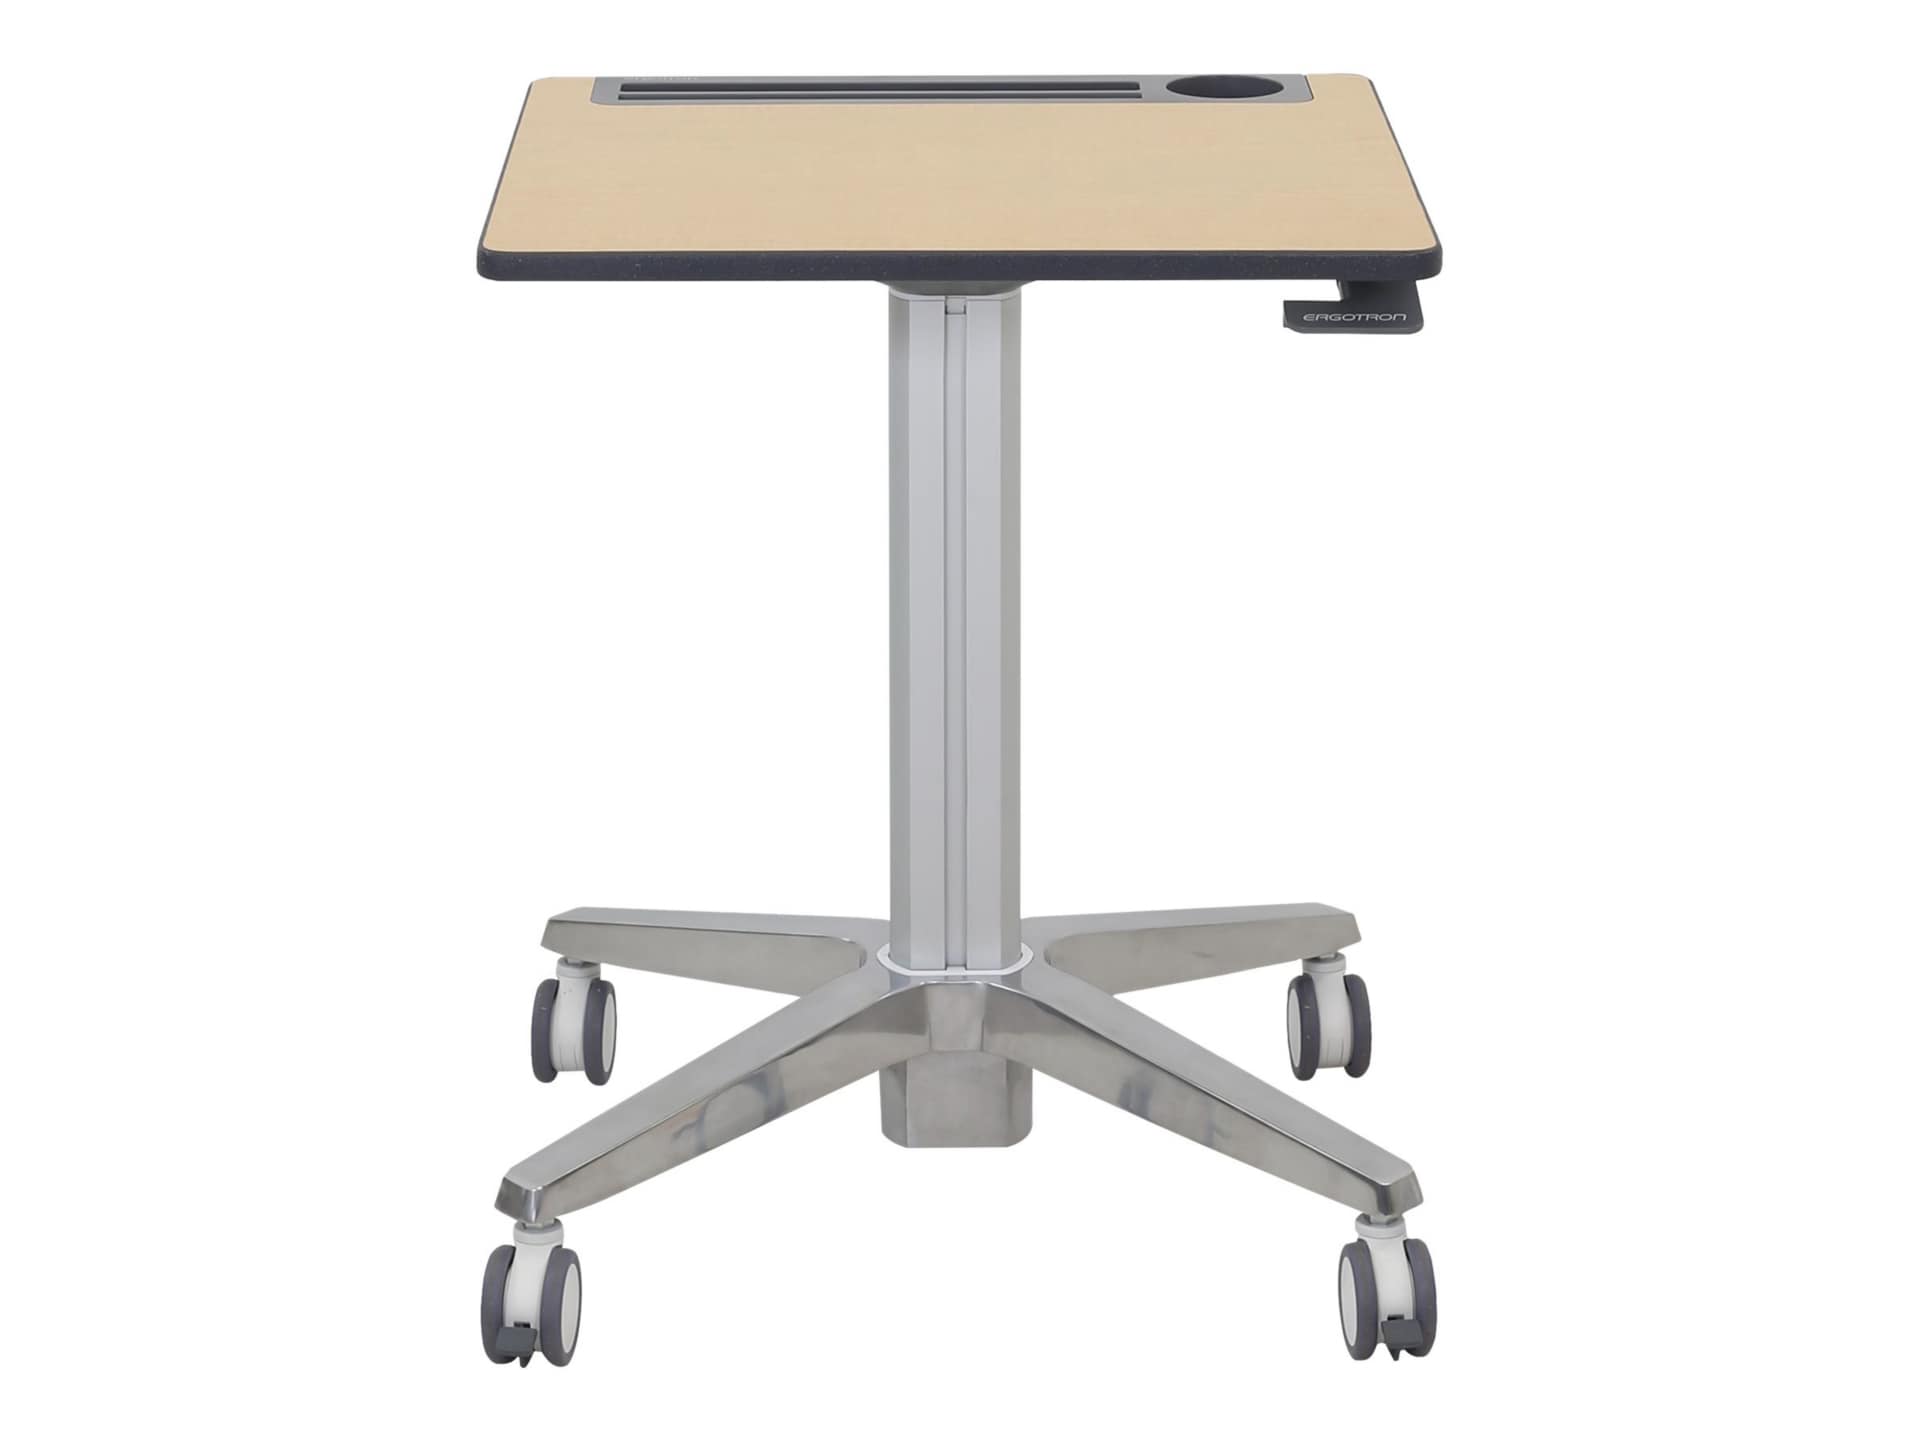 Ergotron - sit/standing desk - rectangular with contoured corners - gray, maple